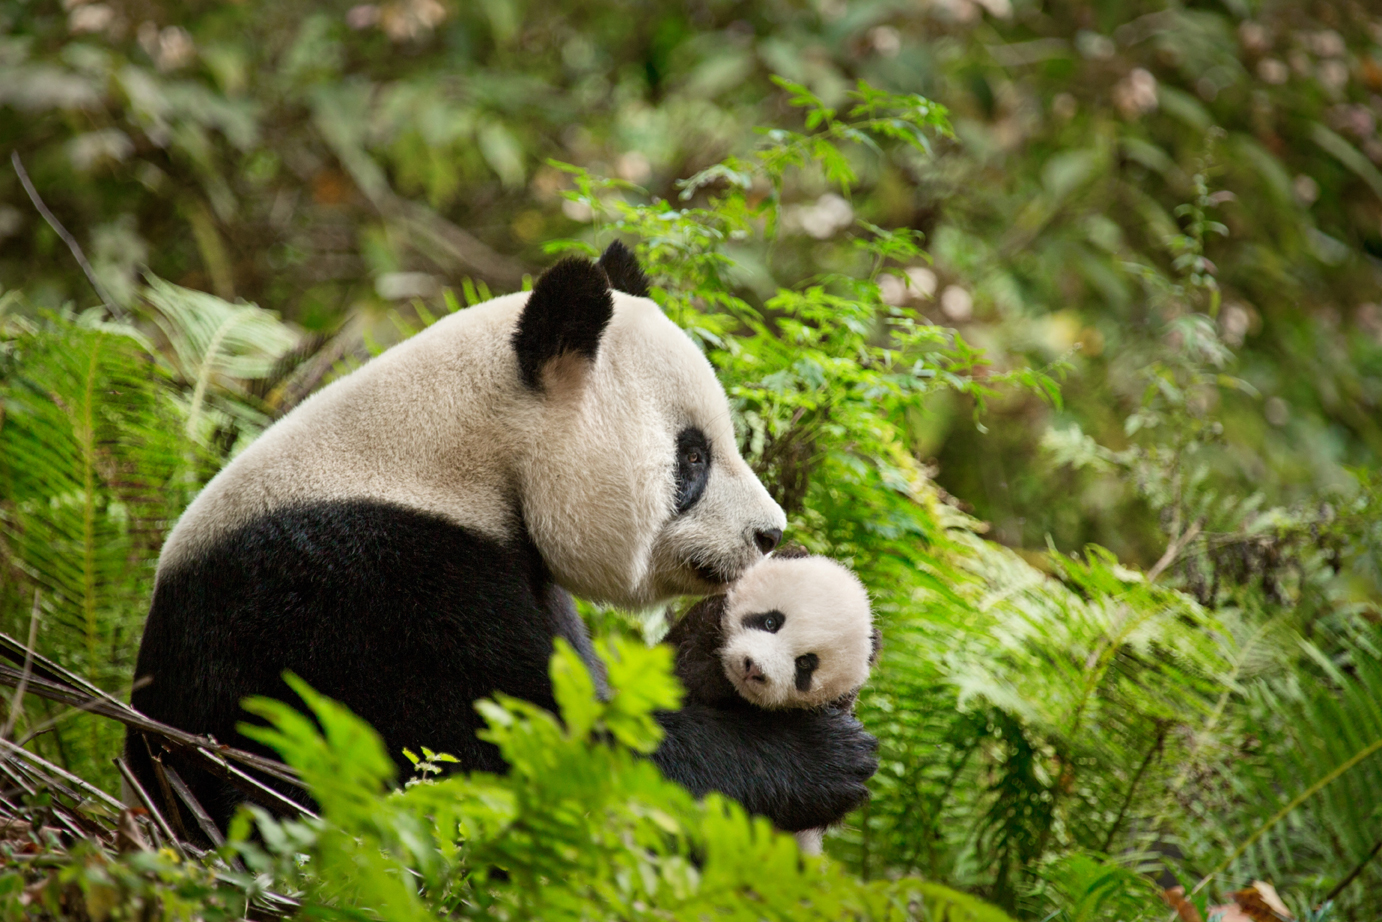 Born in China Panda and cub